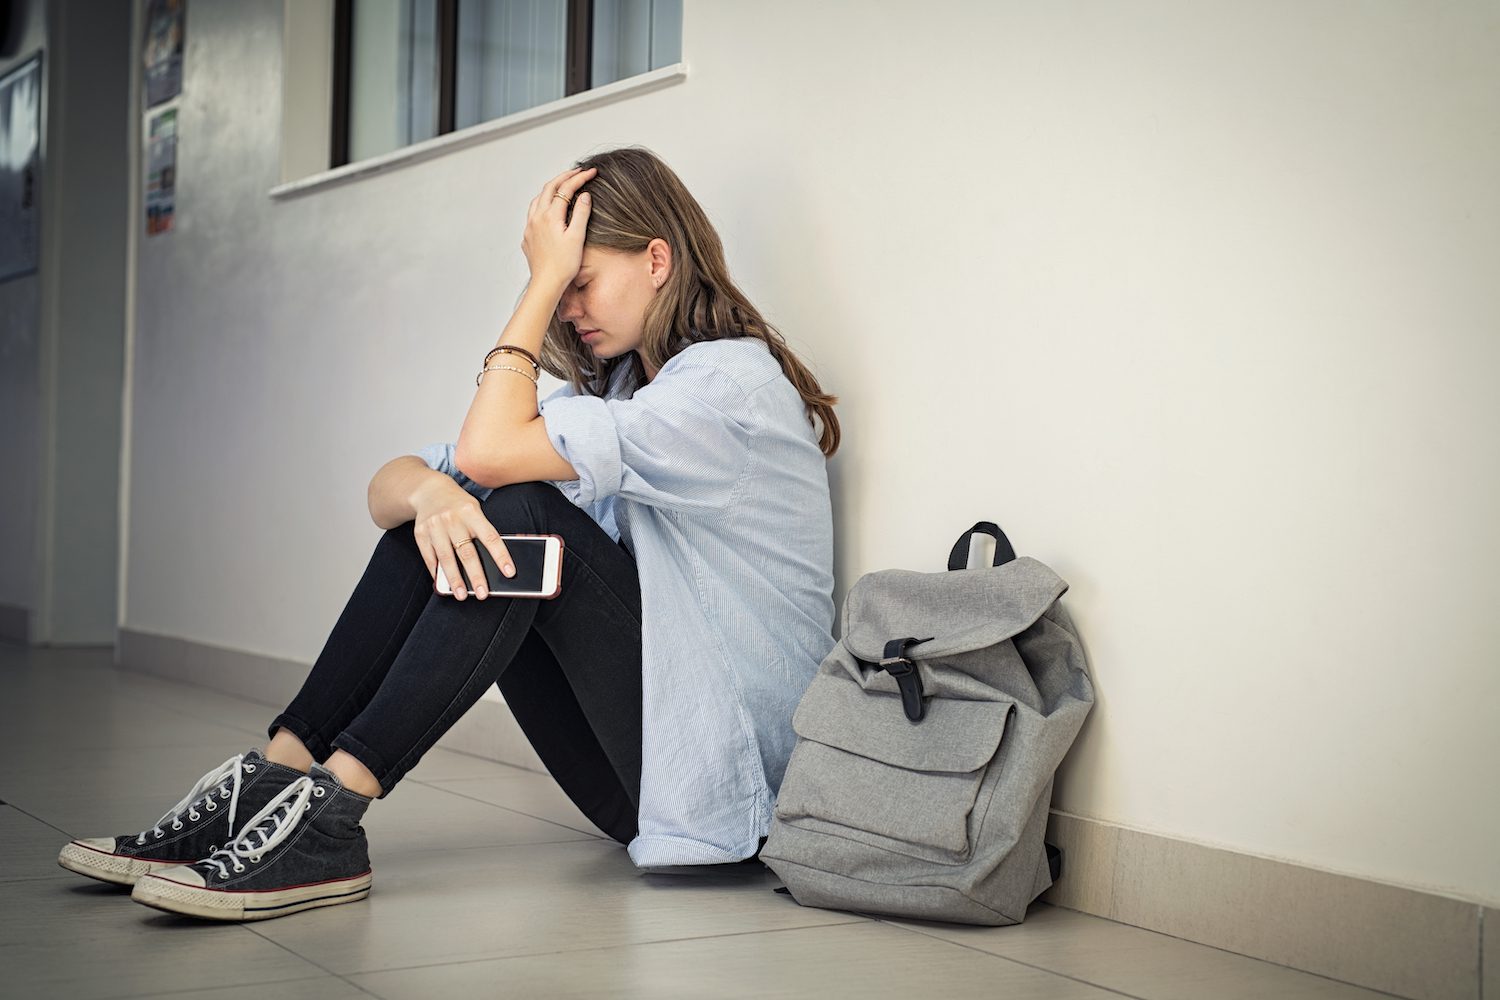 Bullying can cause sleep loss in teens